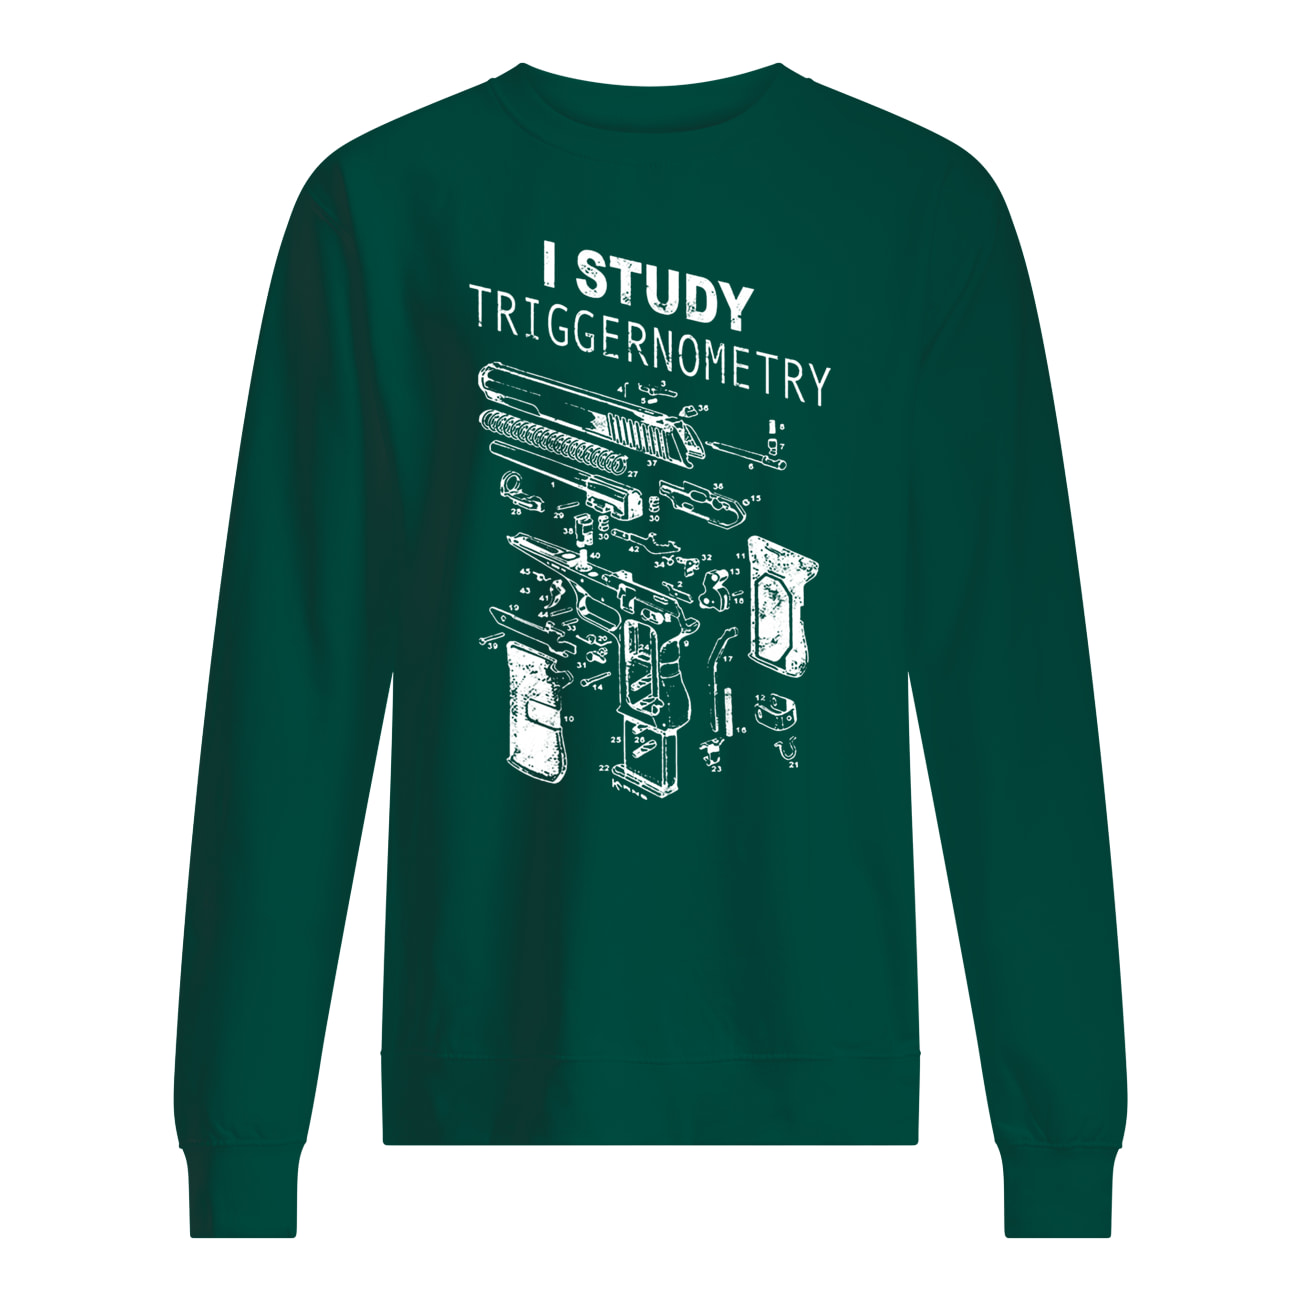 I study triggernometry sweatshirt